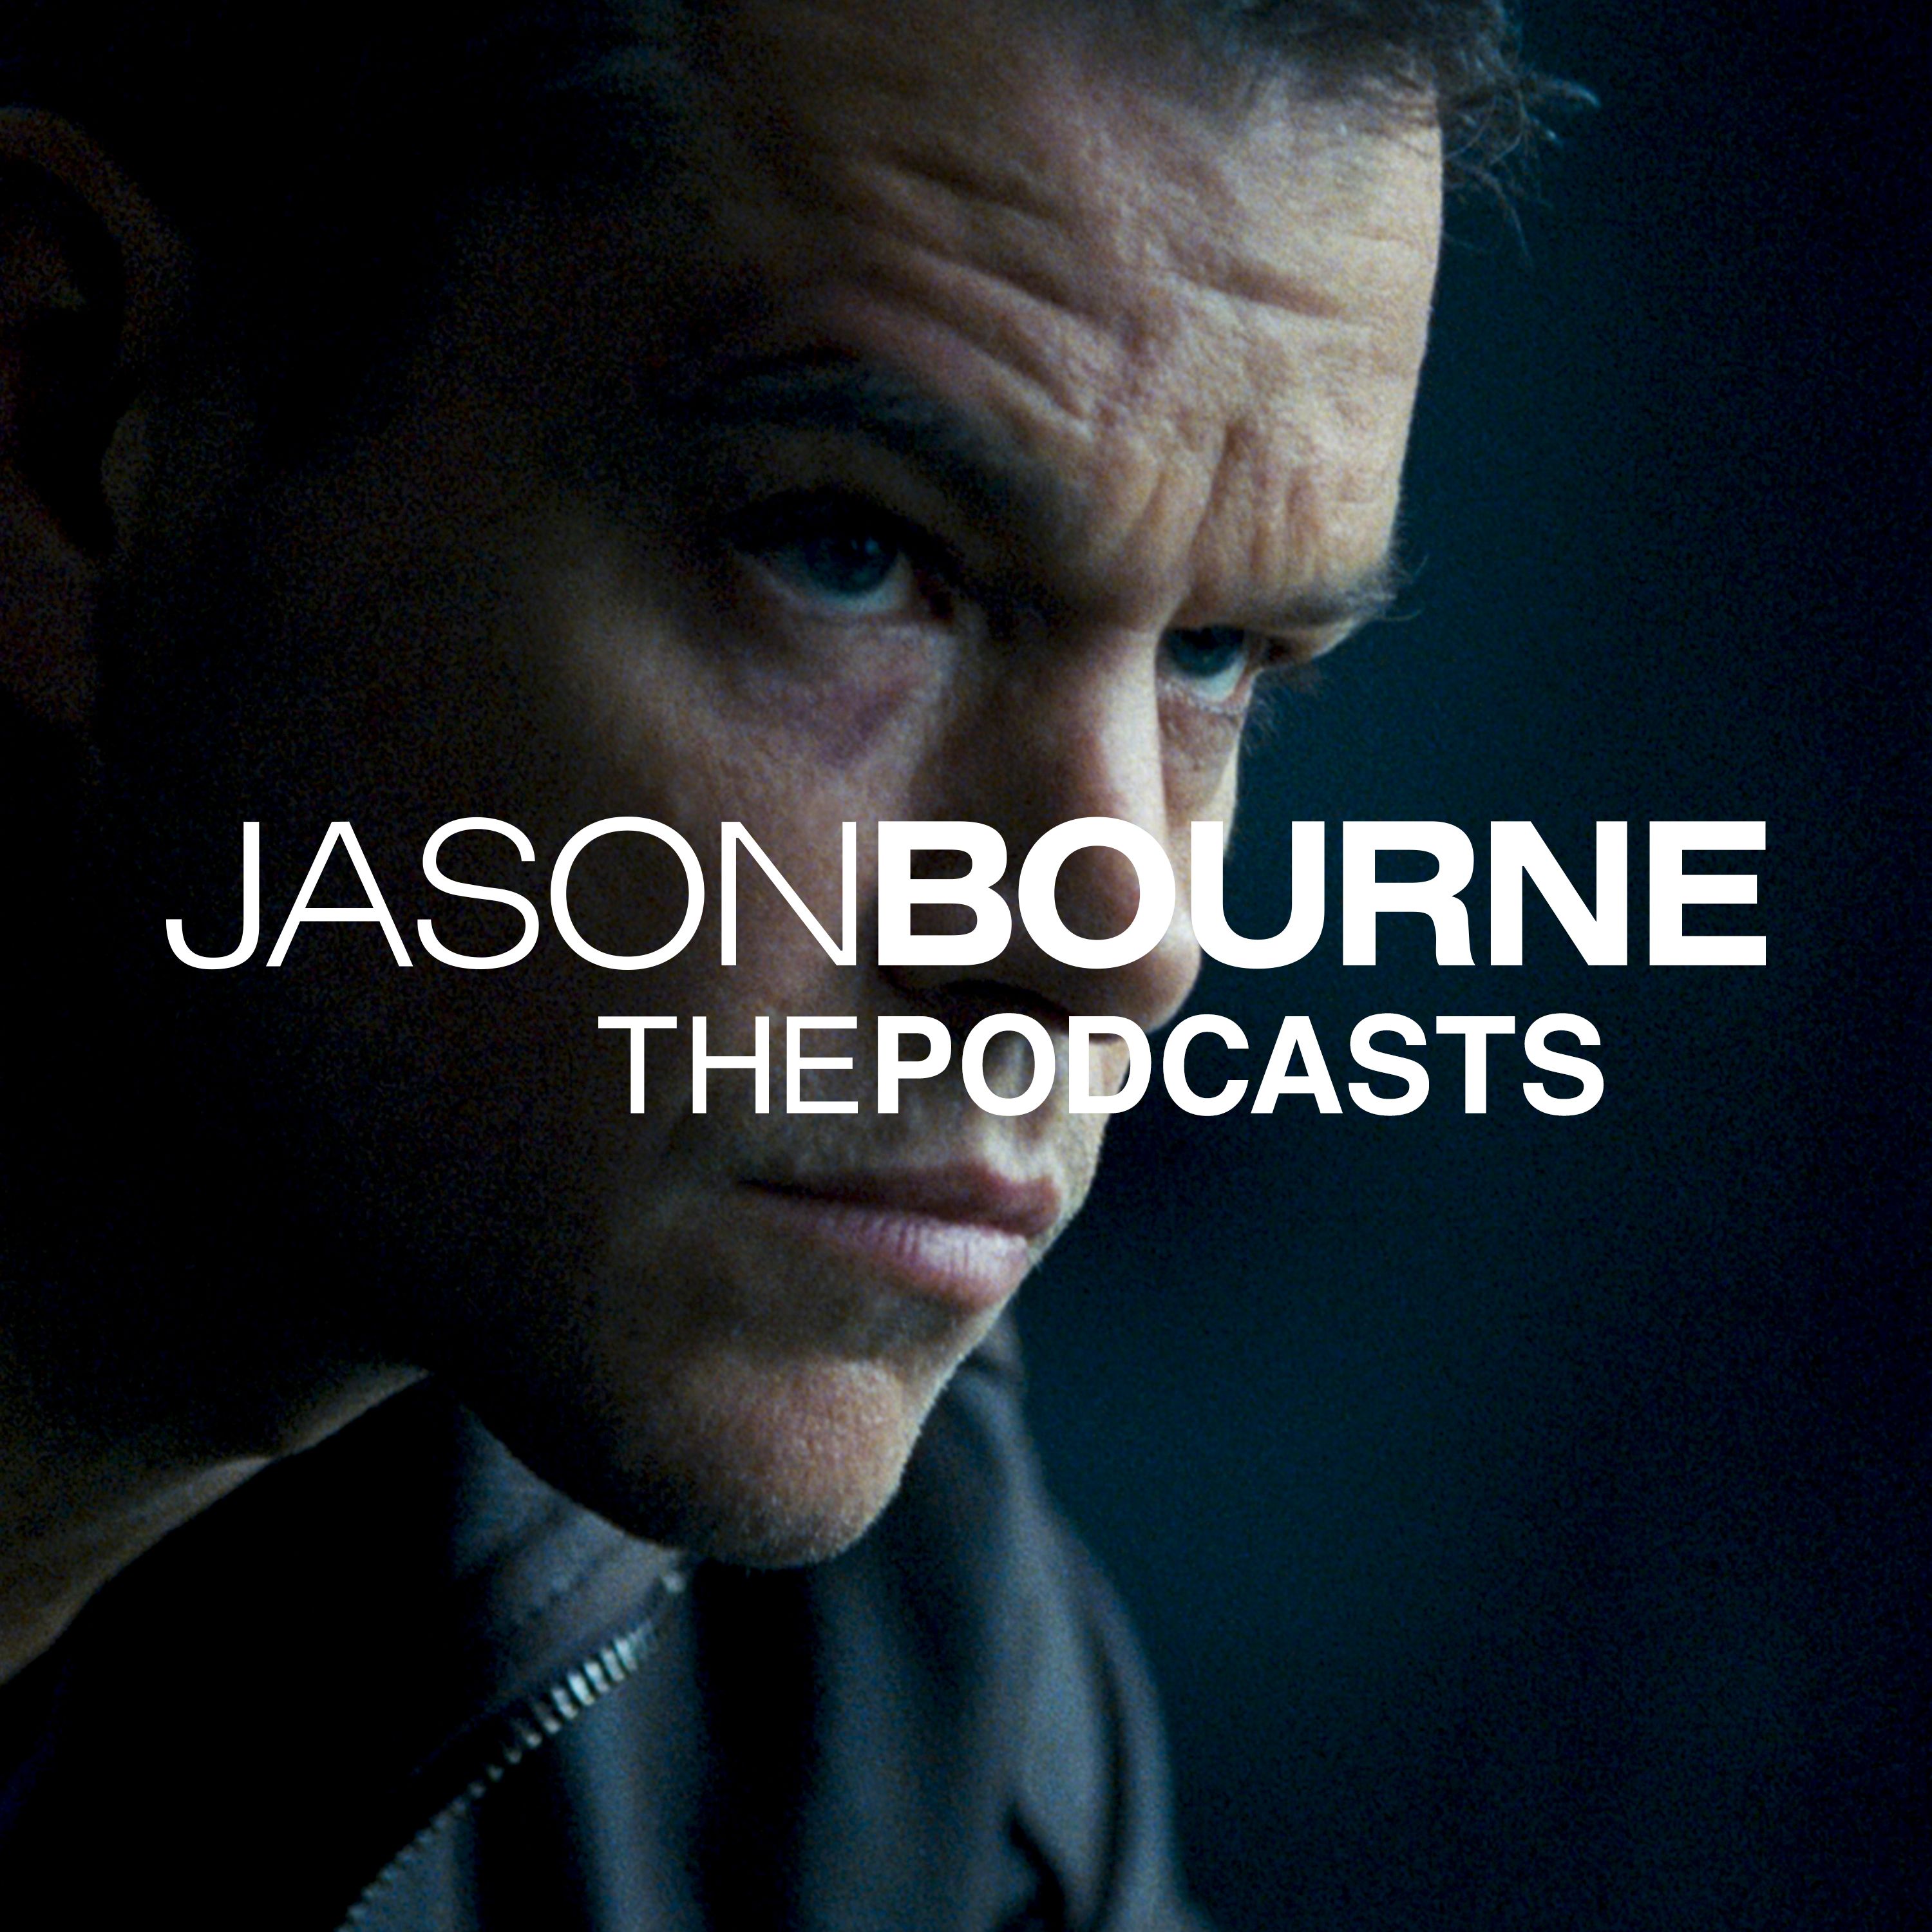 Jason Bourne: The Podcasts Trailer